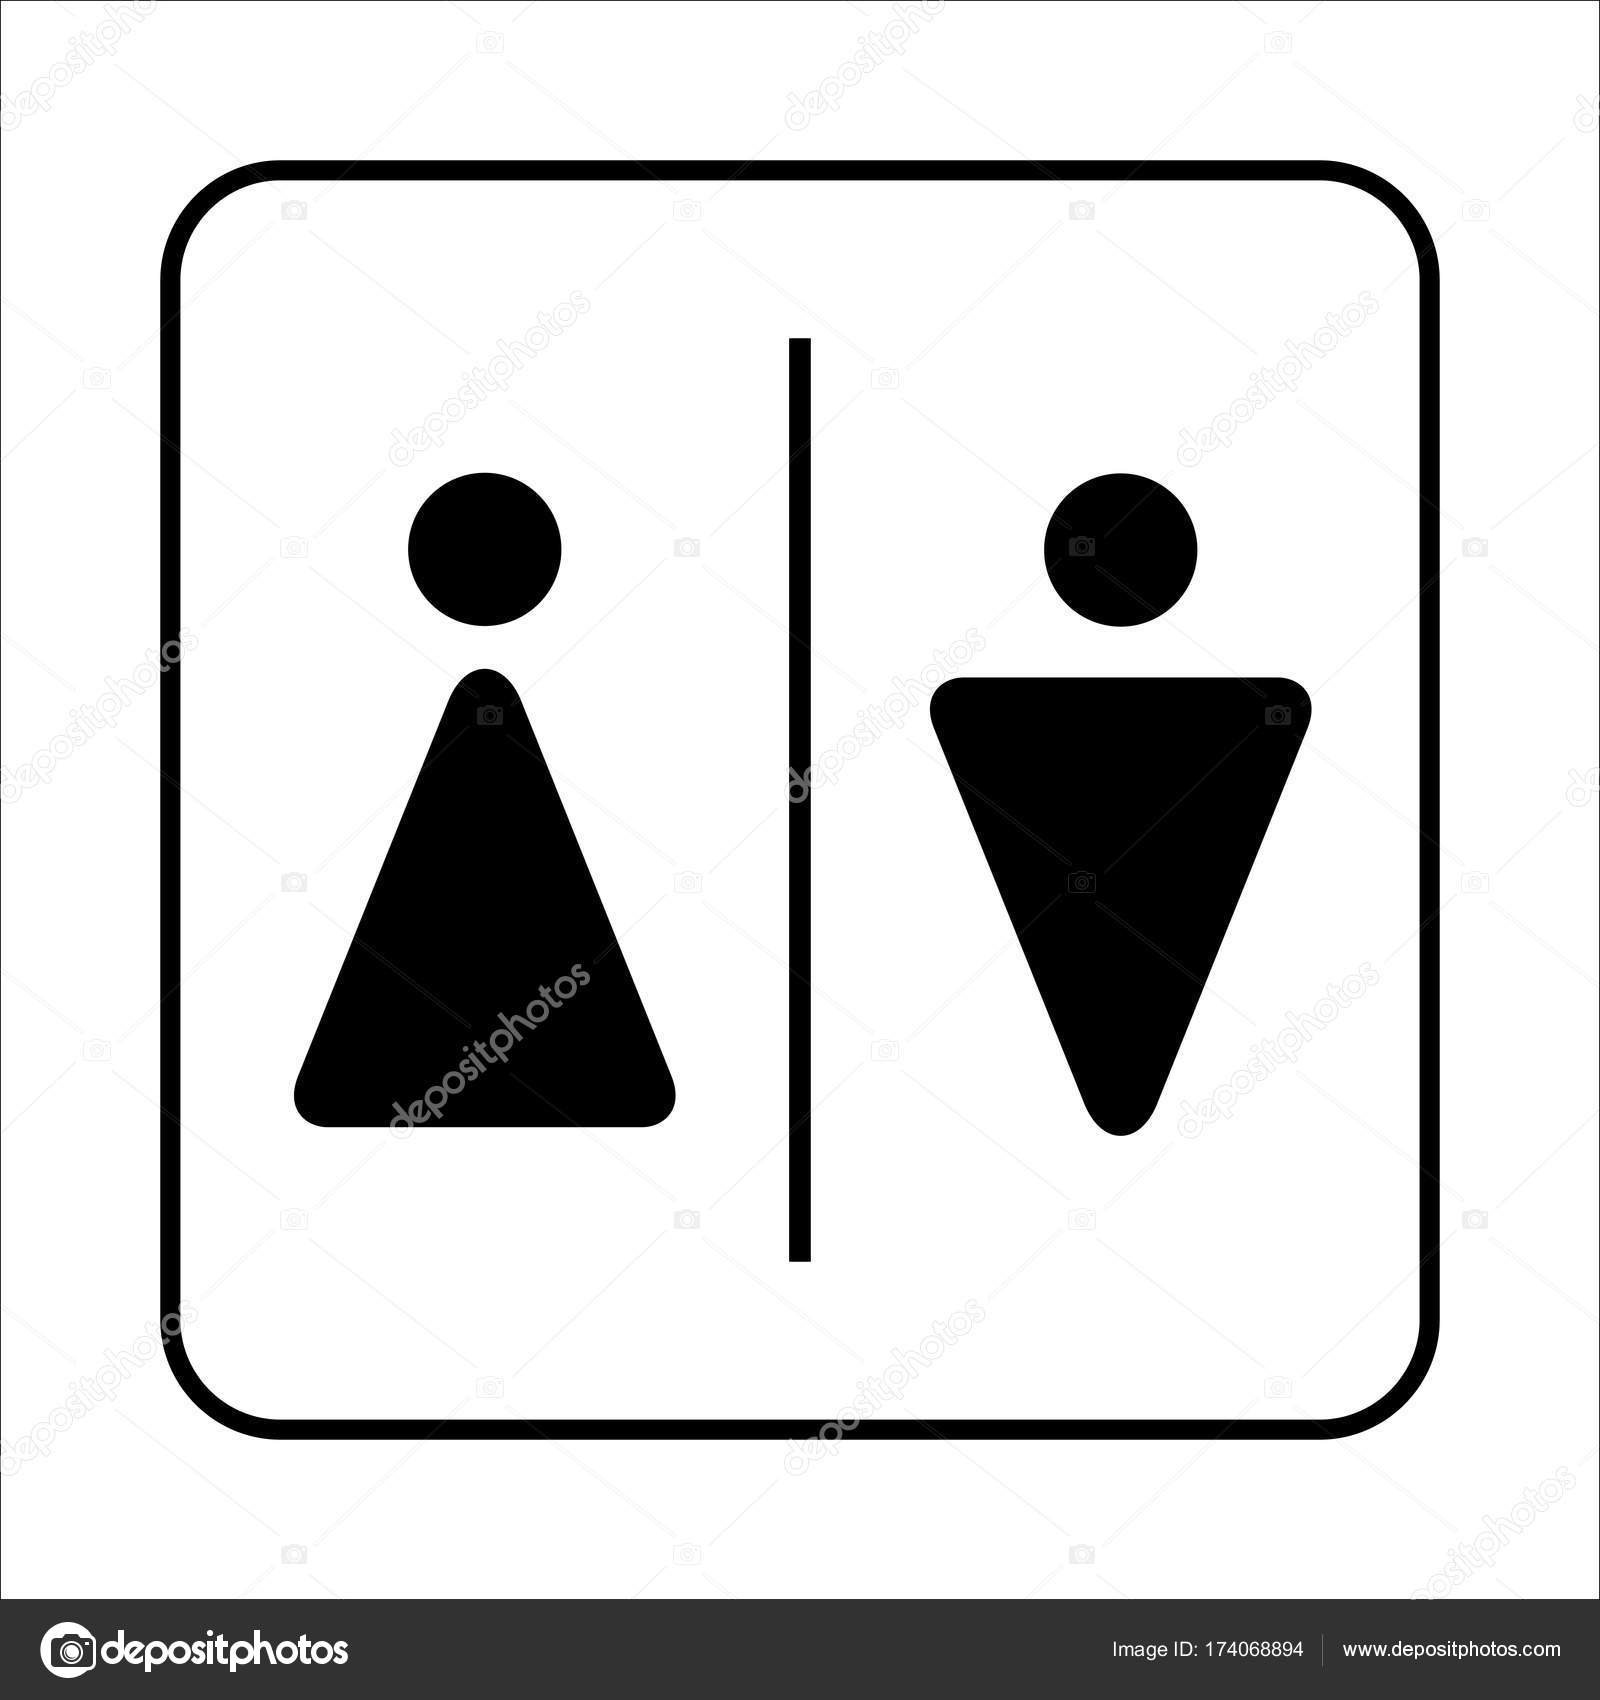 https://st3.depositphotos.com/4857279/17406/v/1600/depositphotos_174068894-stock-illustration-toilet-sign-wc-men-and.jpg